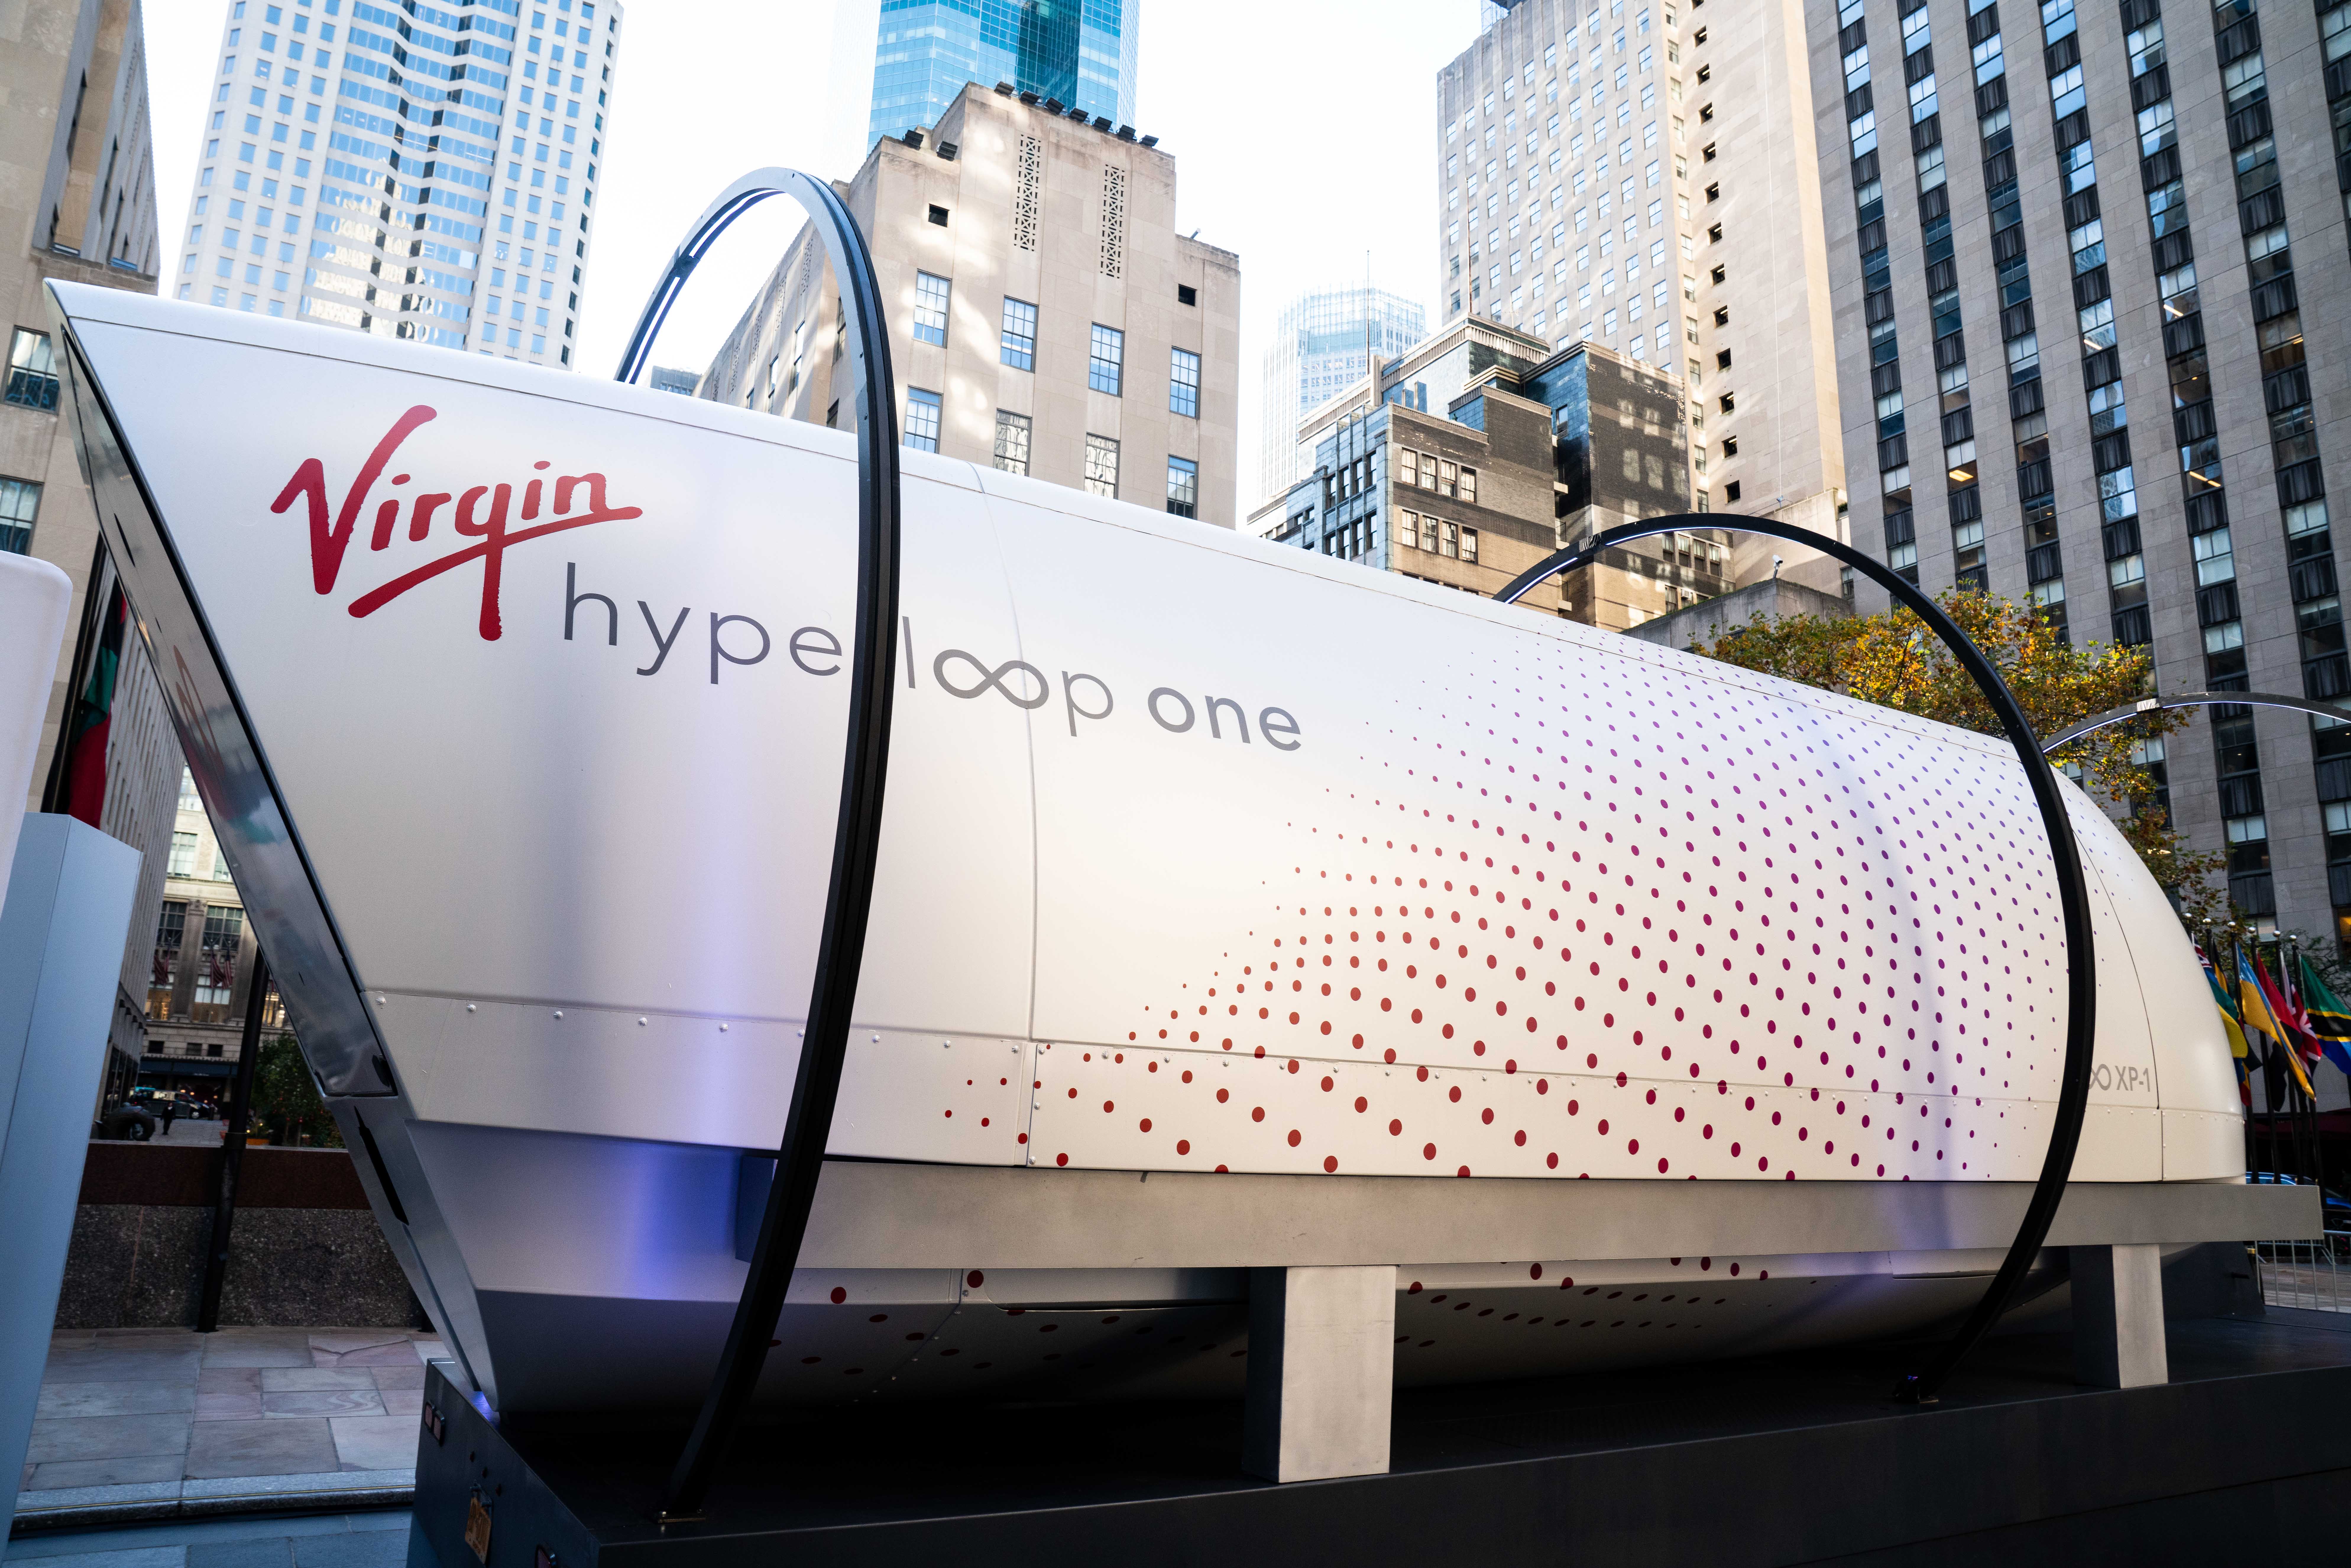 Virgin Hyperloop pod on display in New York